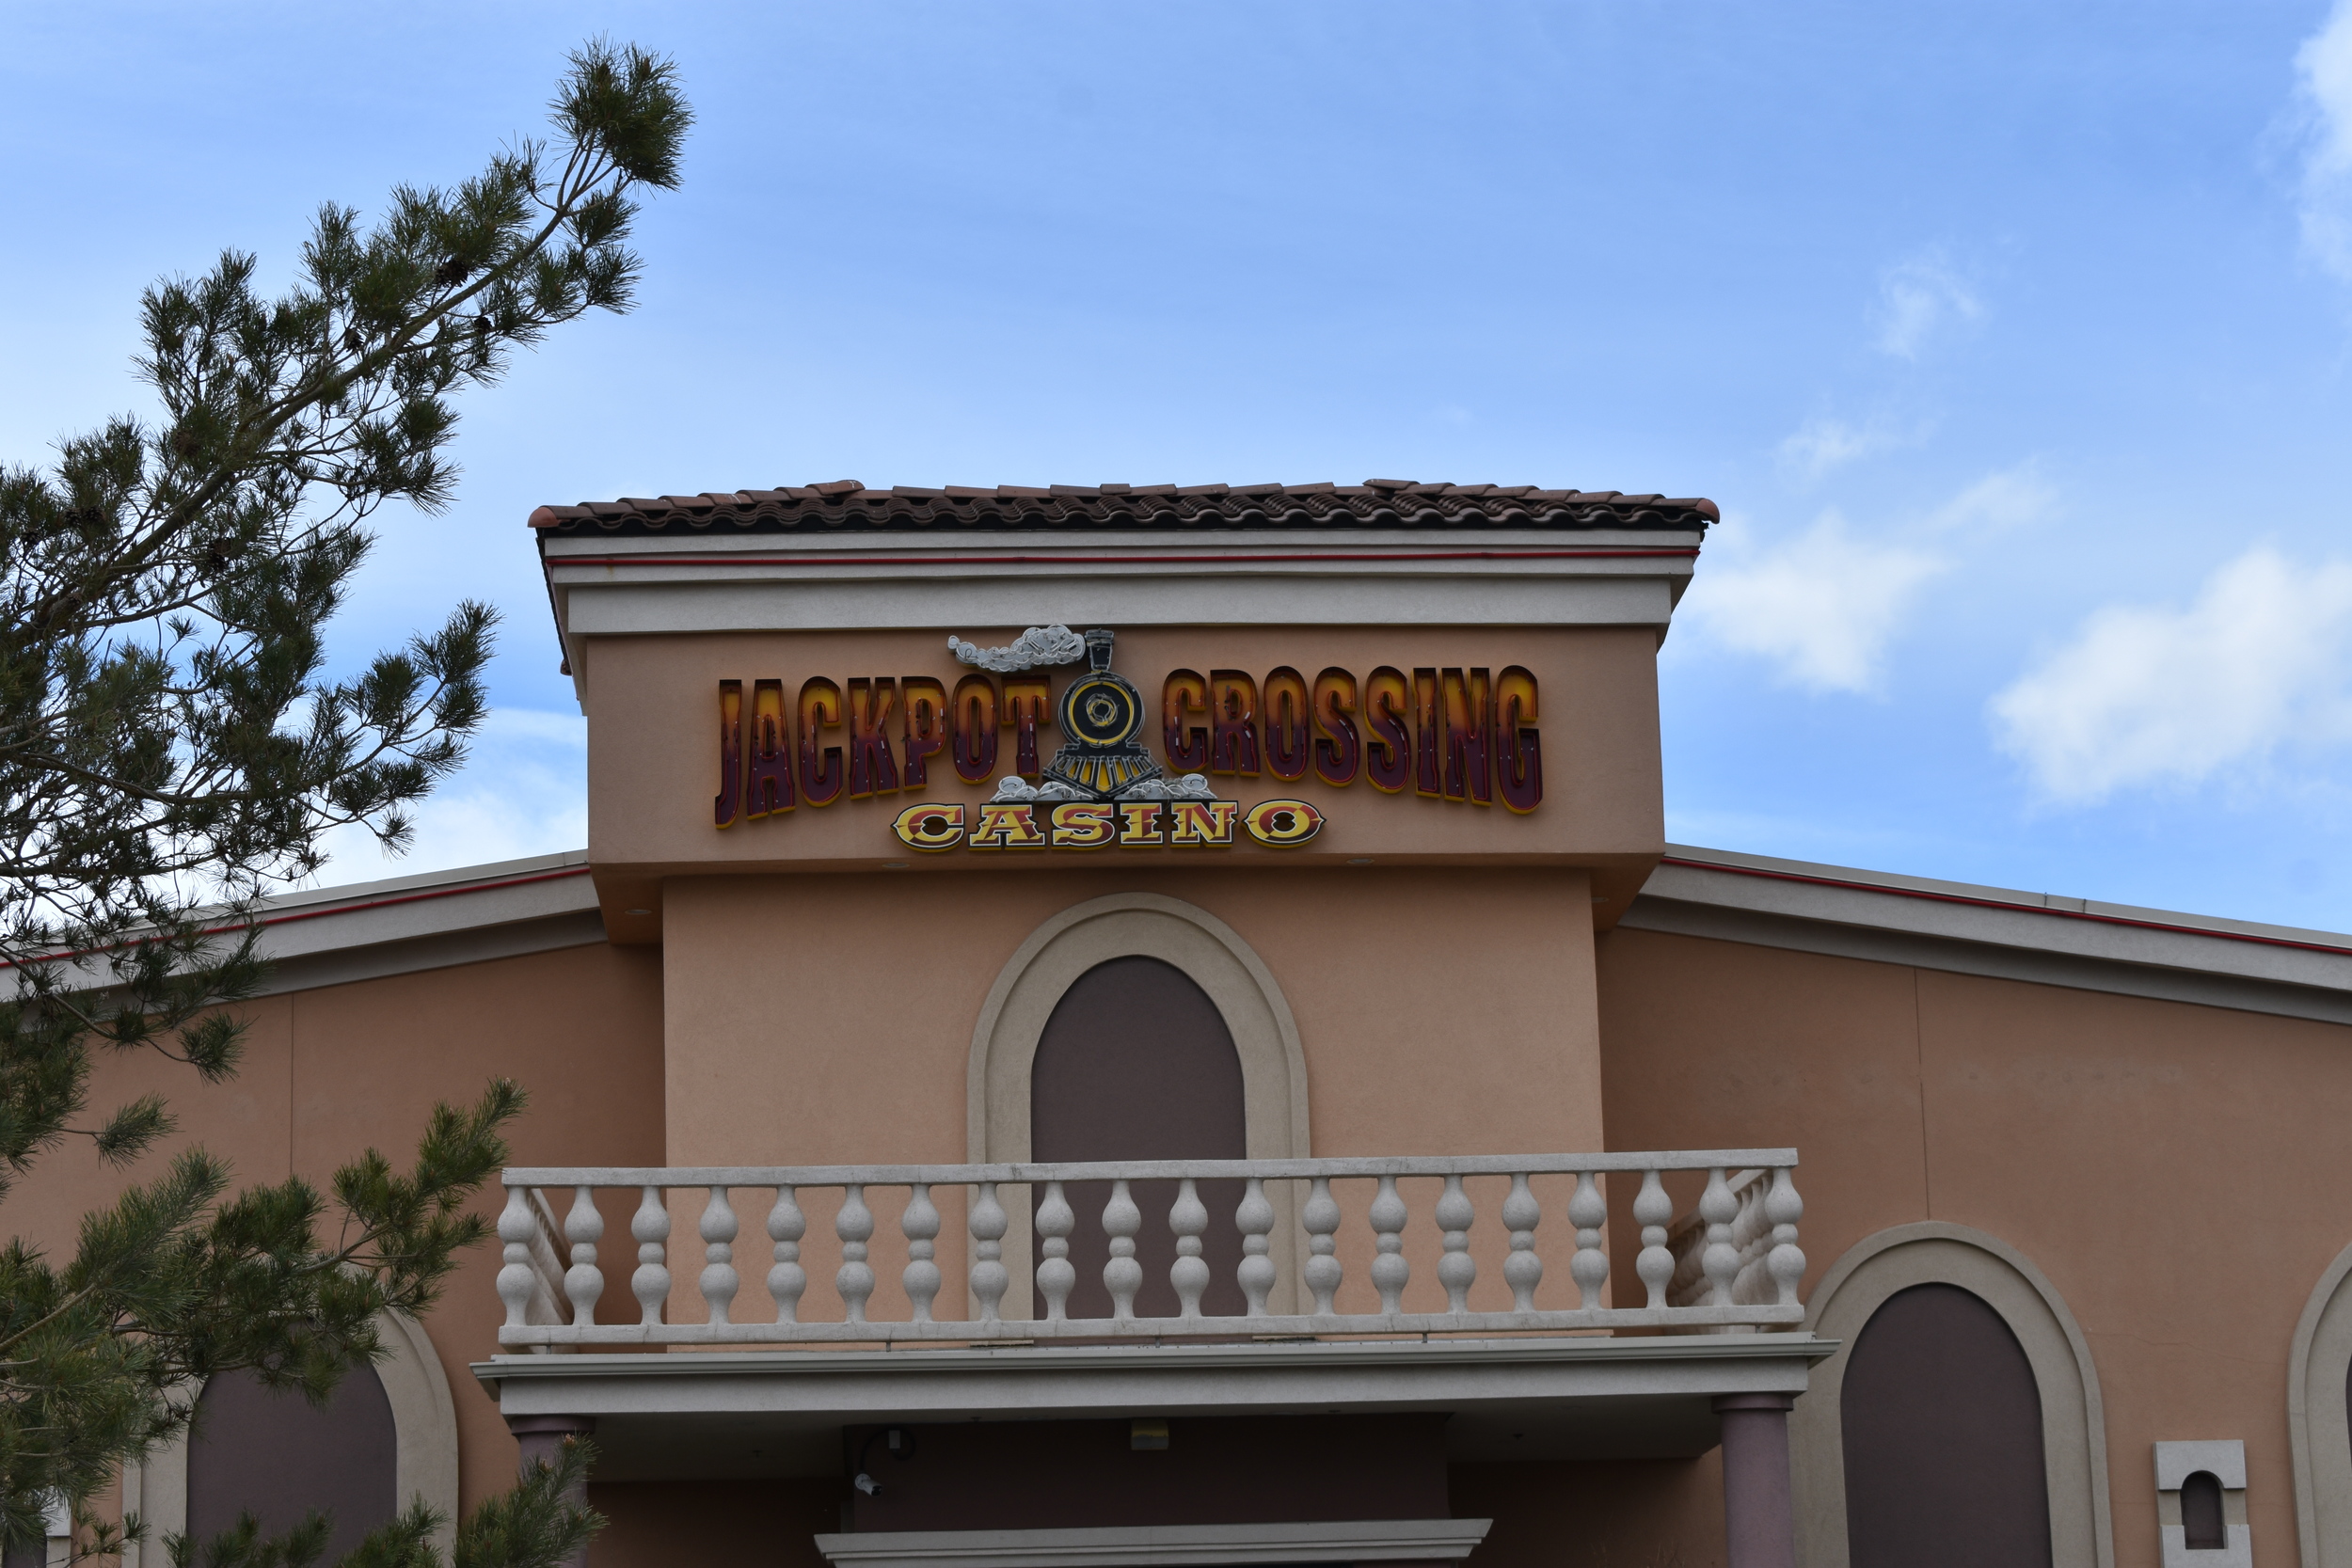 Jackpot Crossing Casino wall mounted sign, Fernley, Nevada